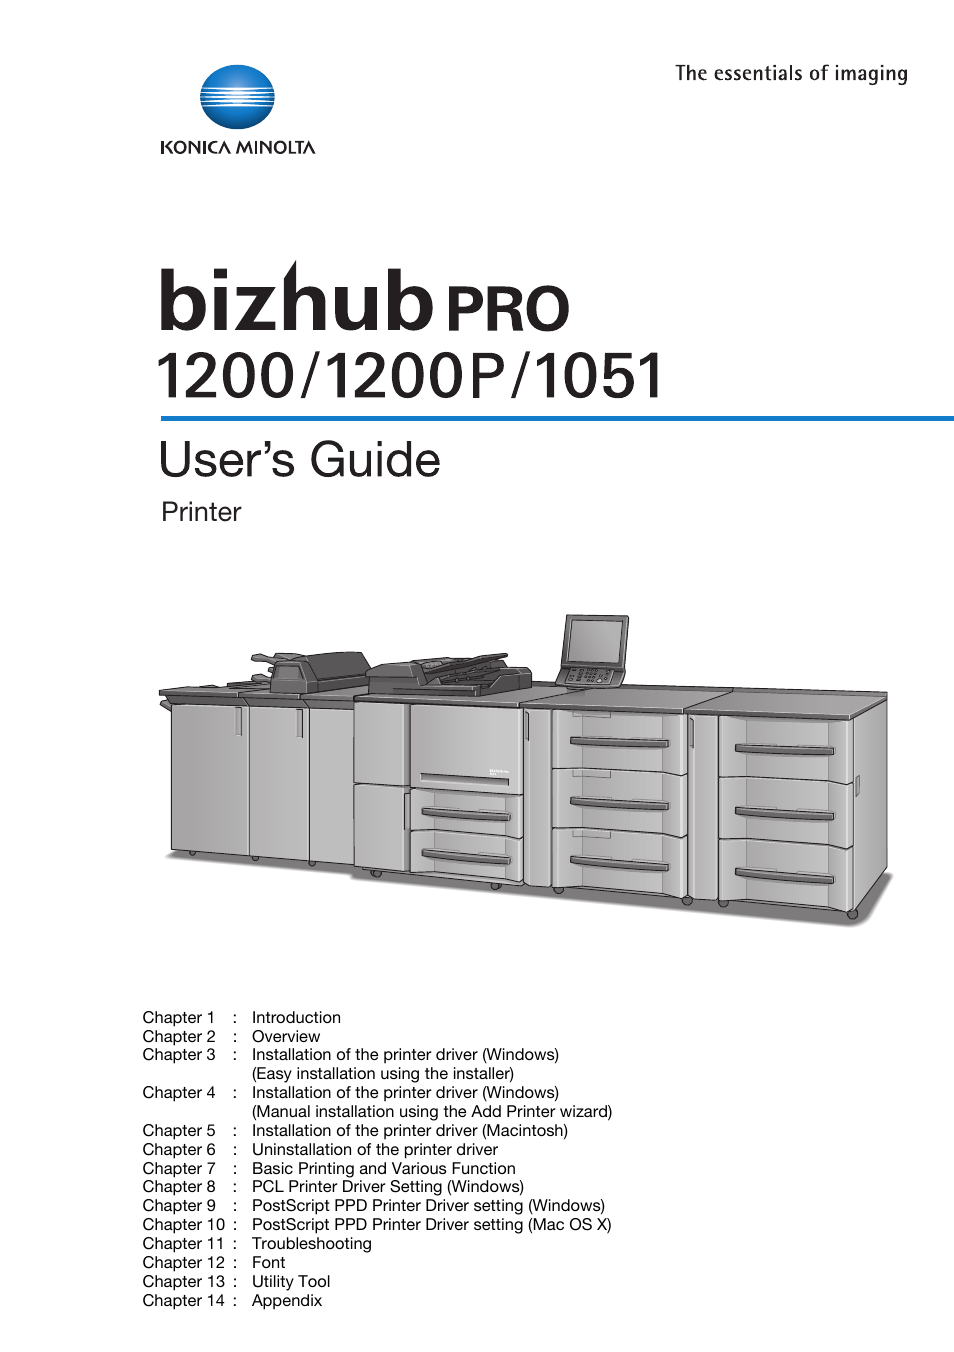 Konica Minolta bizhub PRO 1051 User Manual | 355 pages | Also for: bizhub  PRO 1200P, bizhub PRO 1200